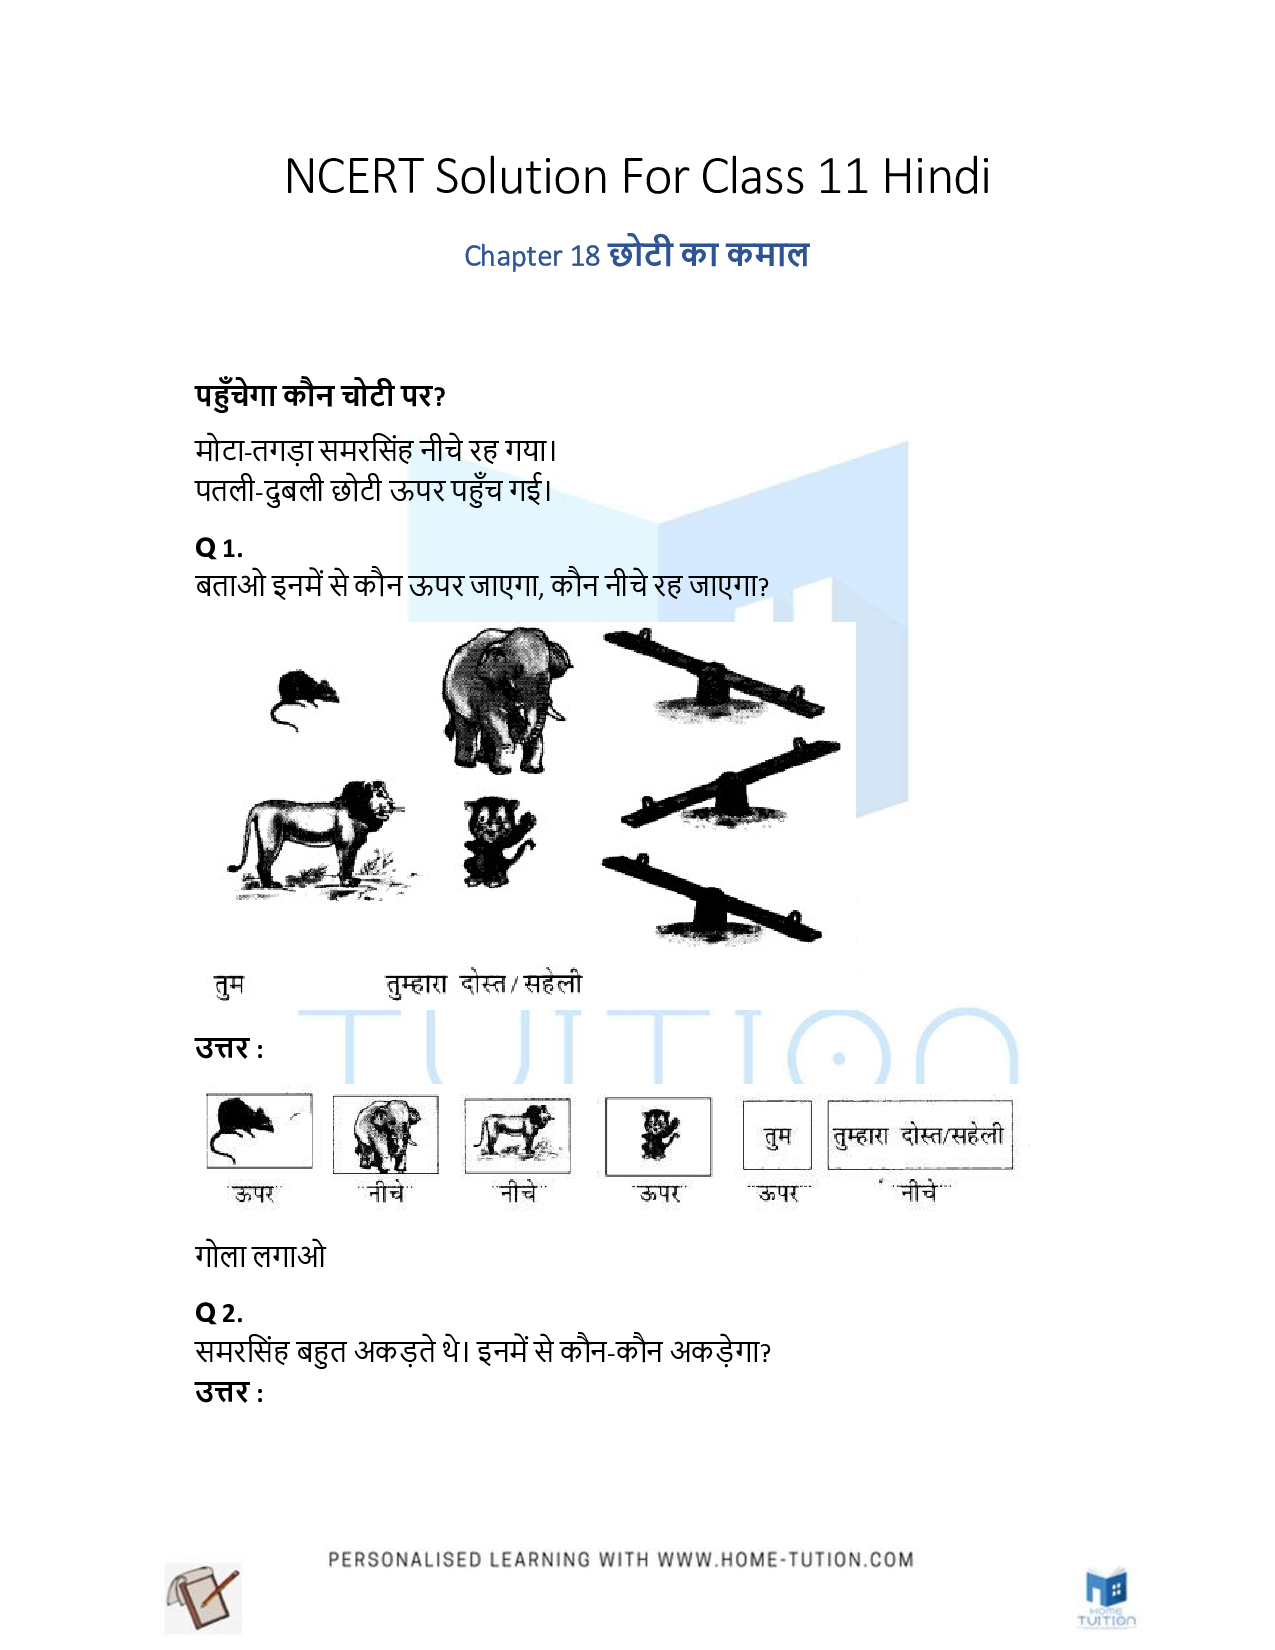 NCERT Solution for Class 1 Hindi Chapter 18 Chotti Ka Kamal (छोटी-का-कमाल)